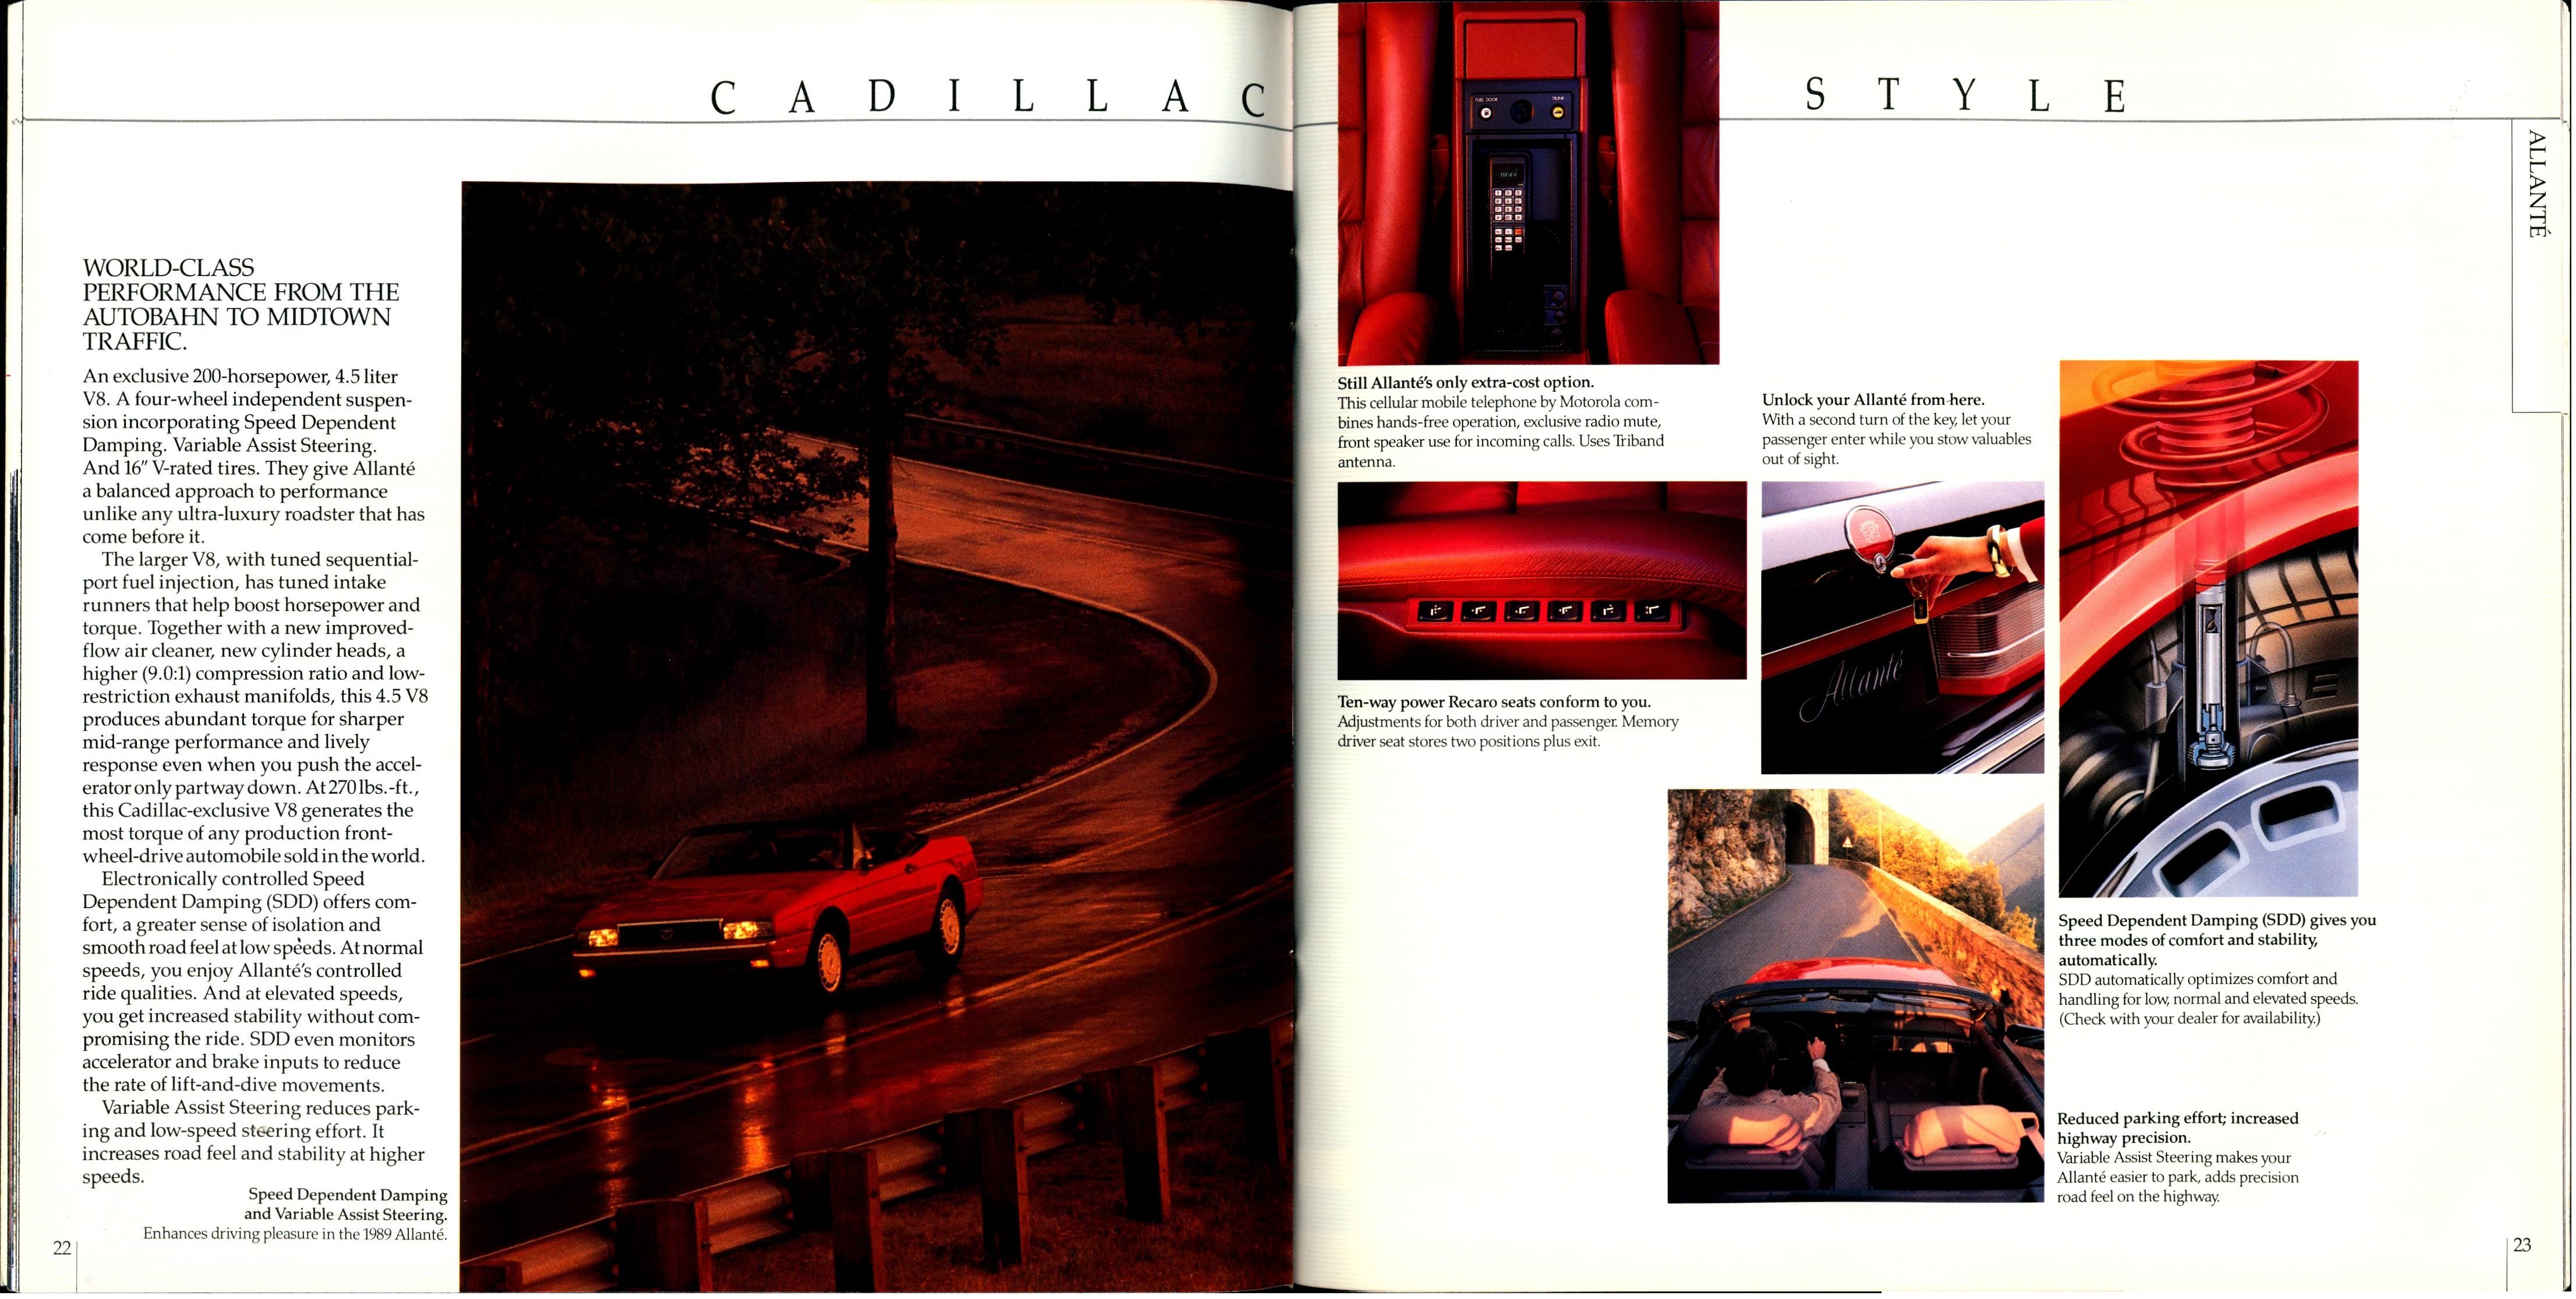 1989 Cadillac Full Line Prestige Brochure 22-23